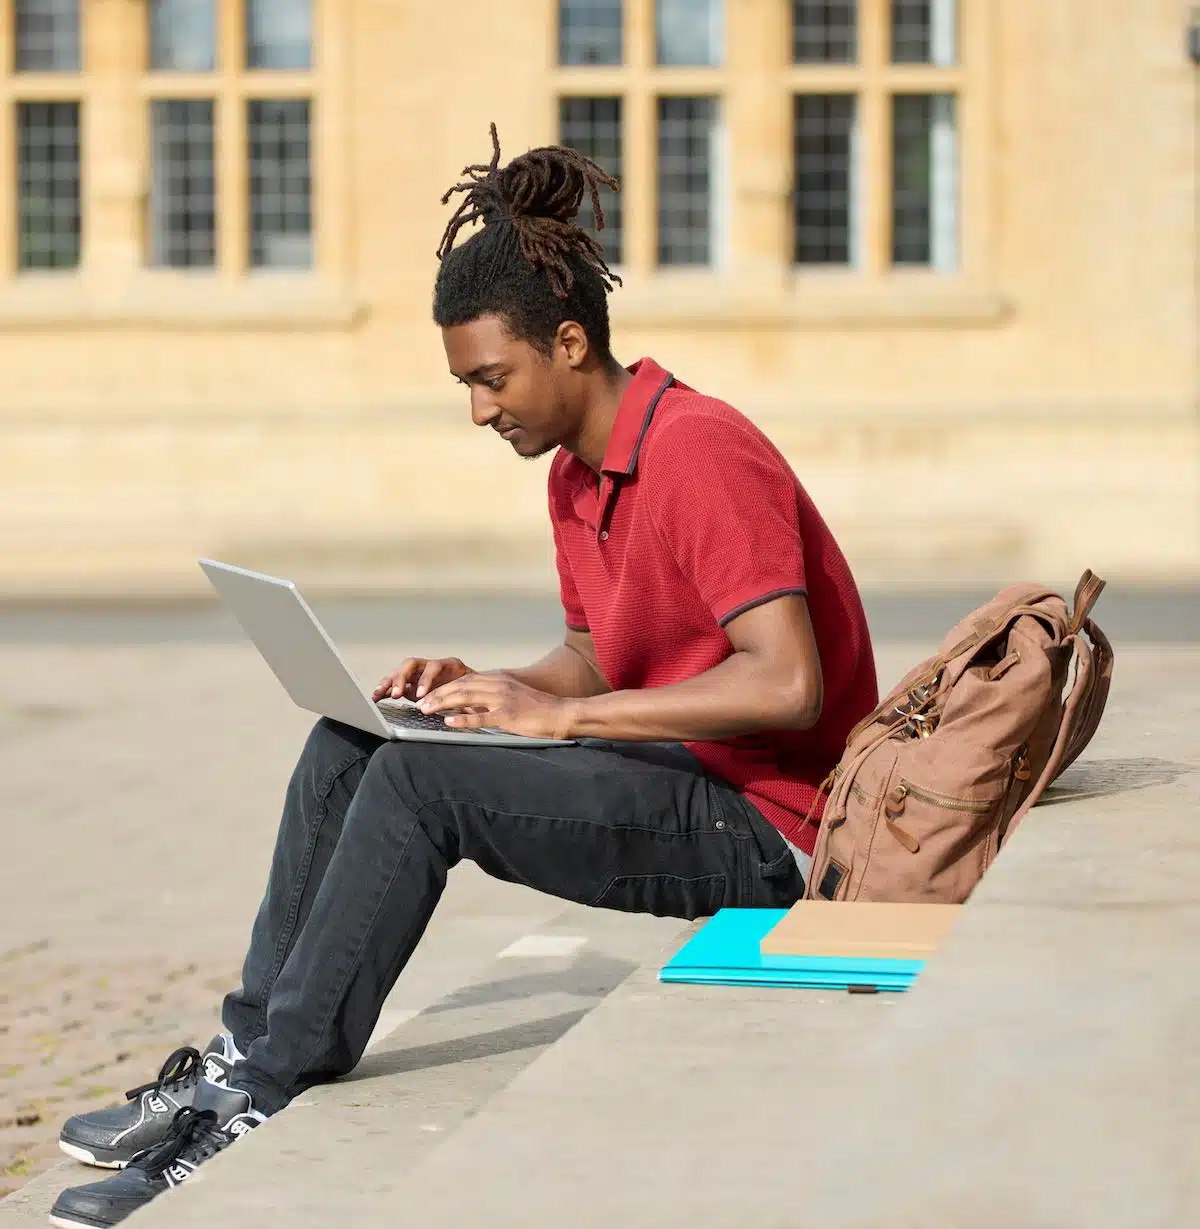 Male Student Working On Laptop Sitting On StepsOutside University Building In Oxford UK